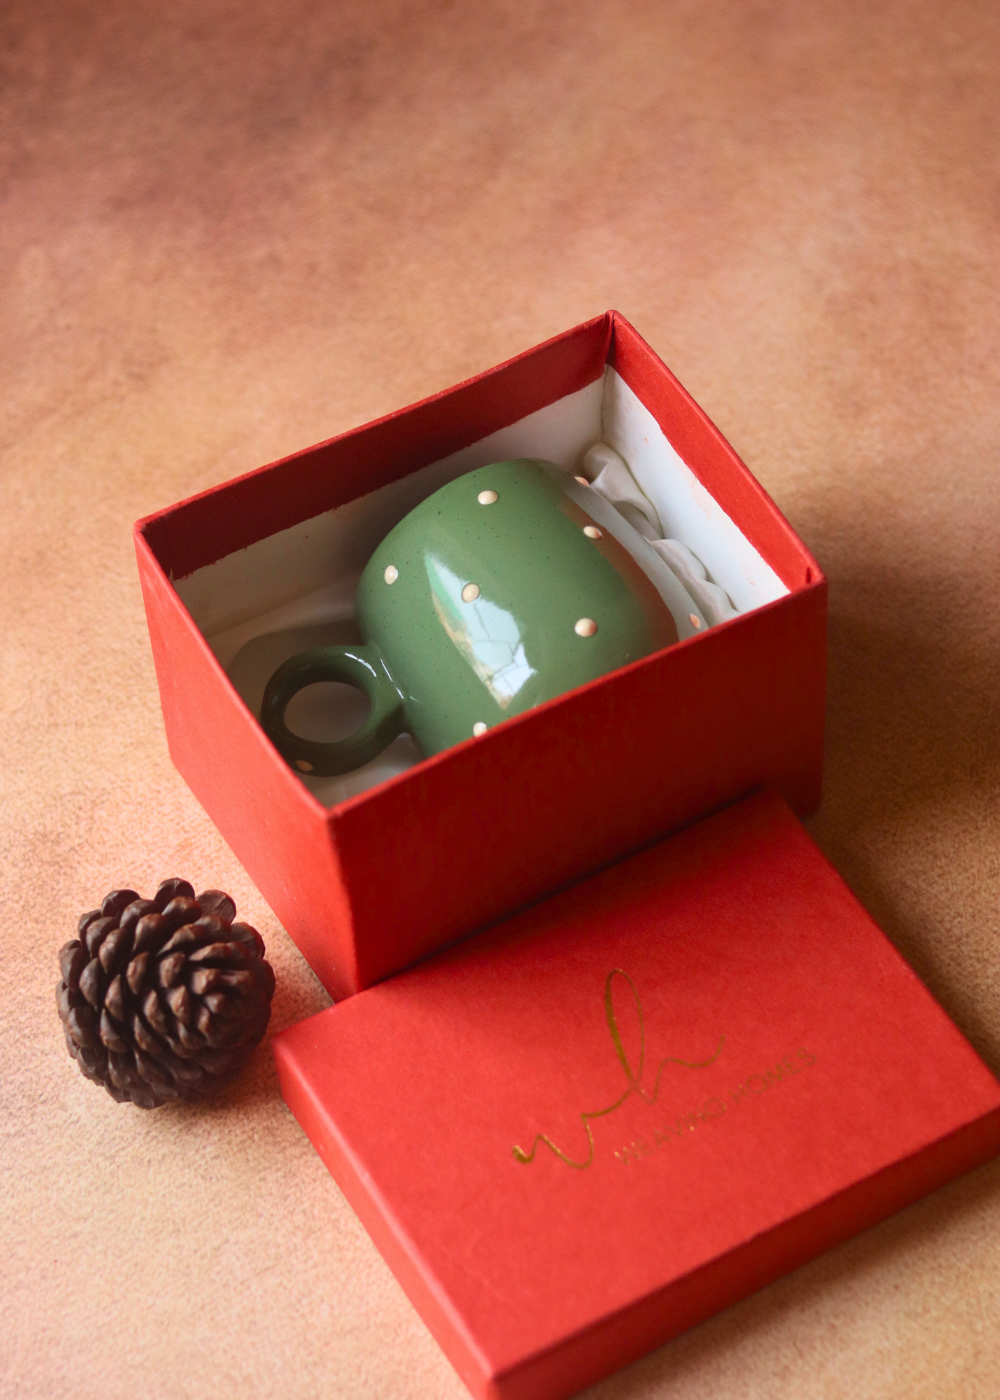 Christmas cuddle coffee mug in box